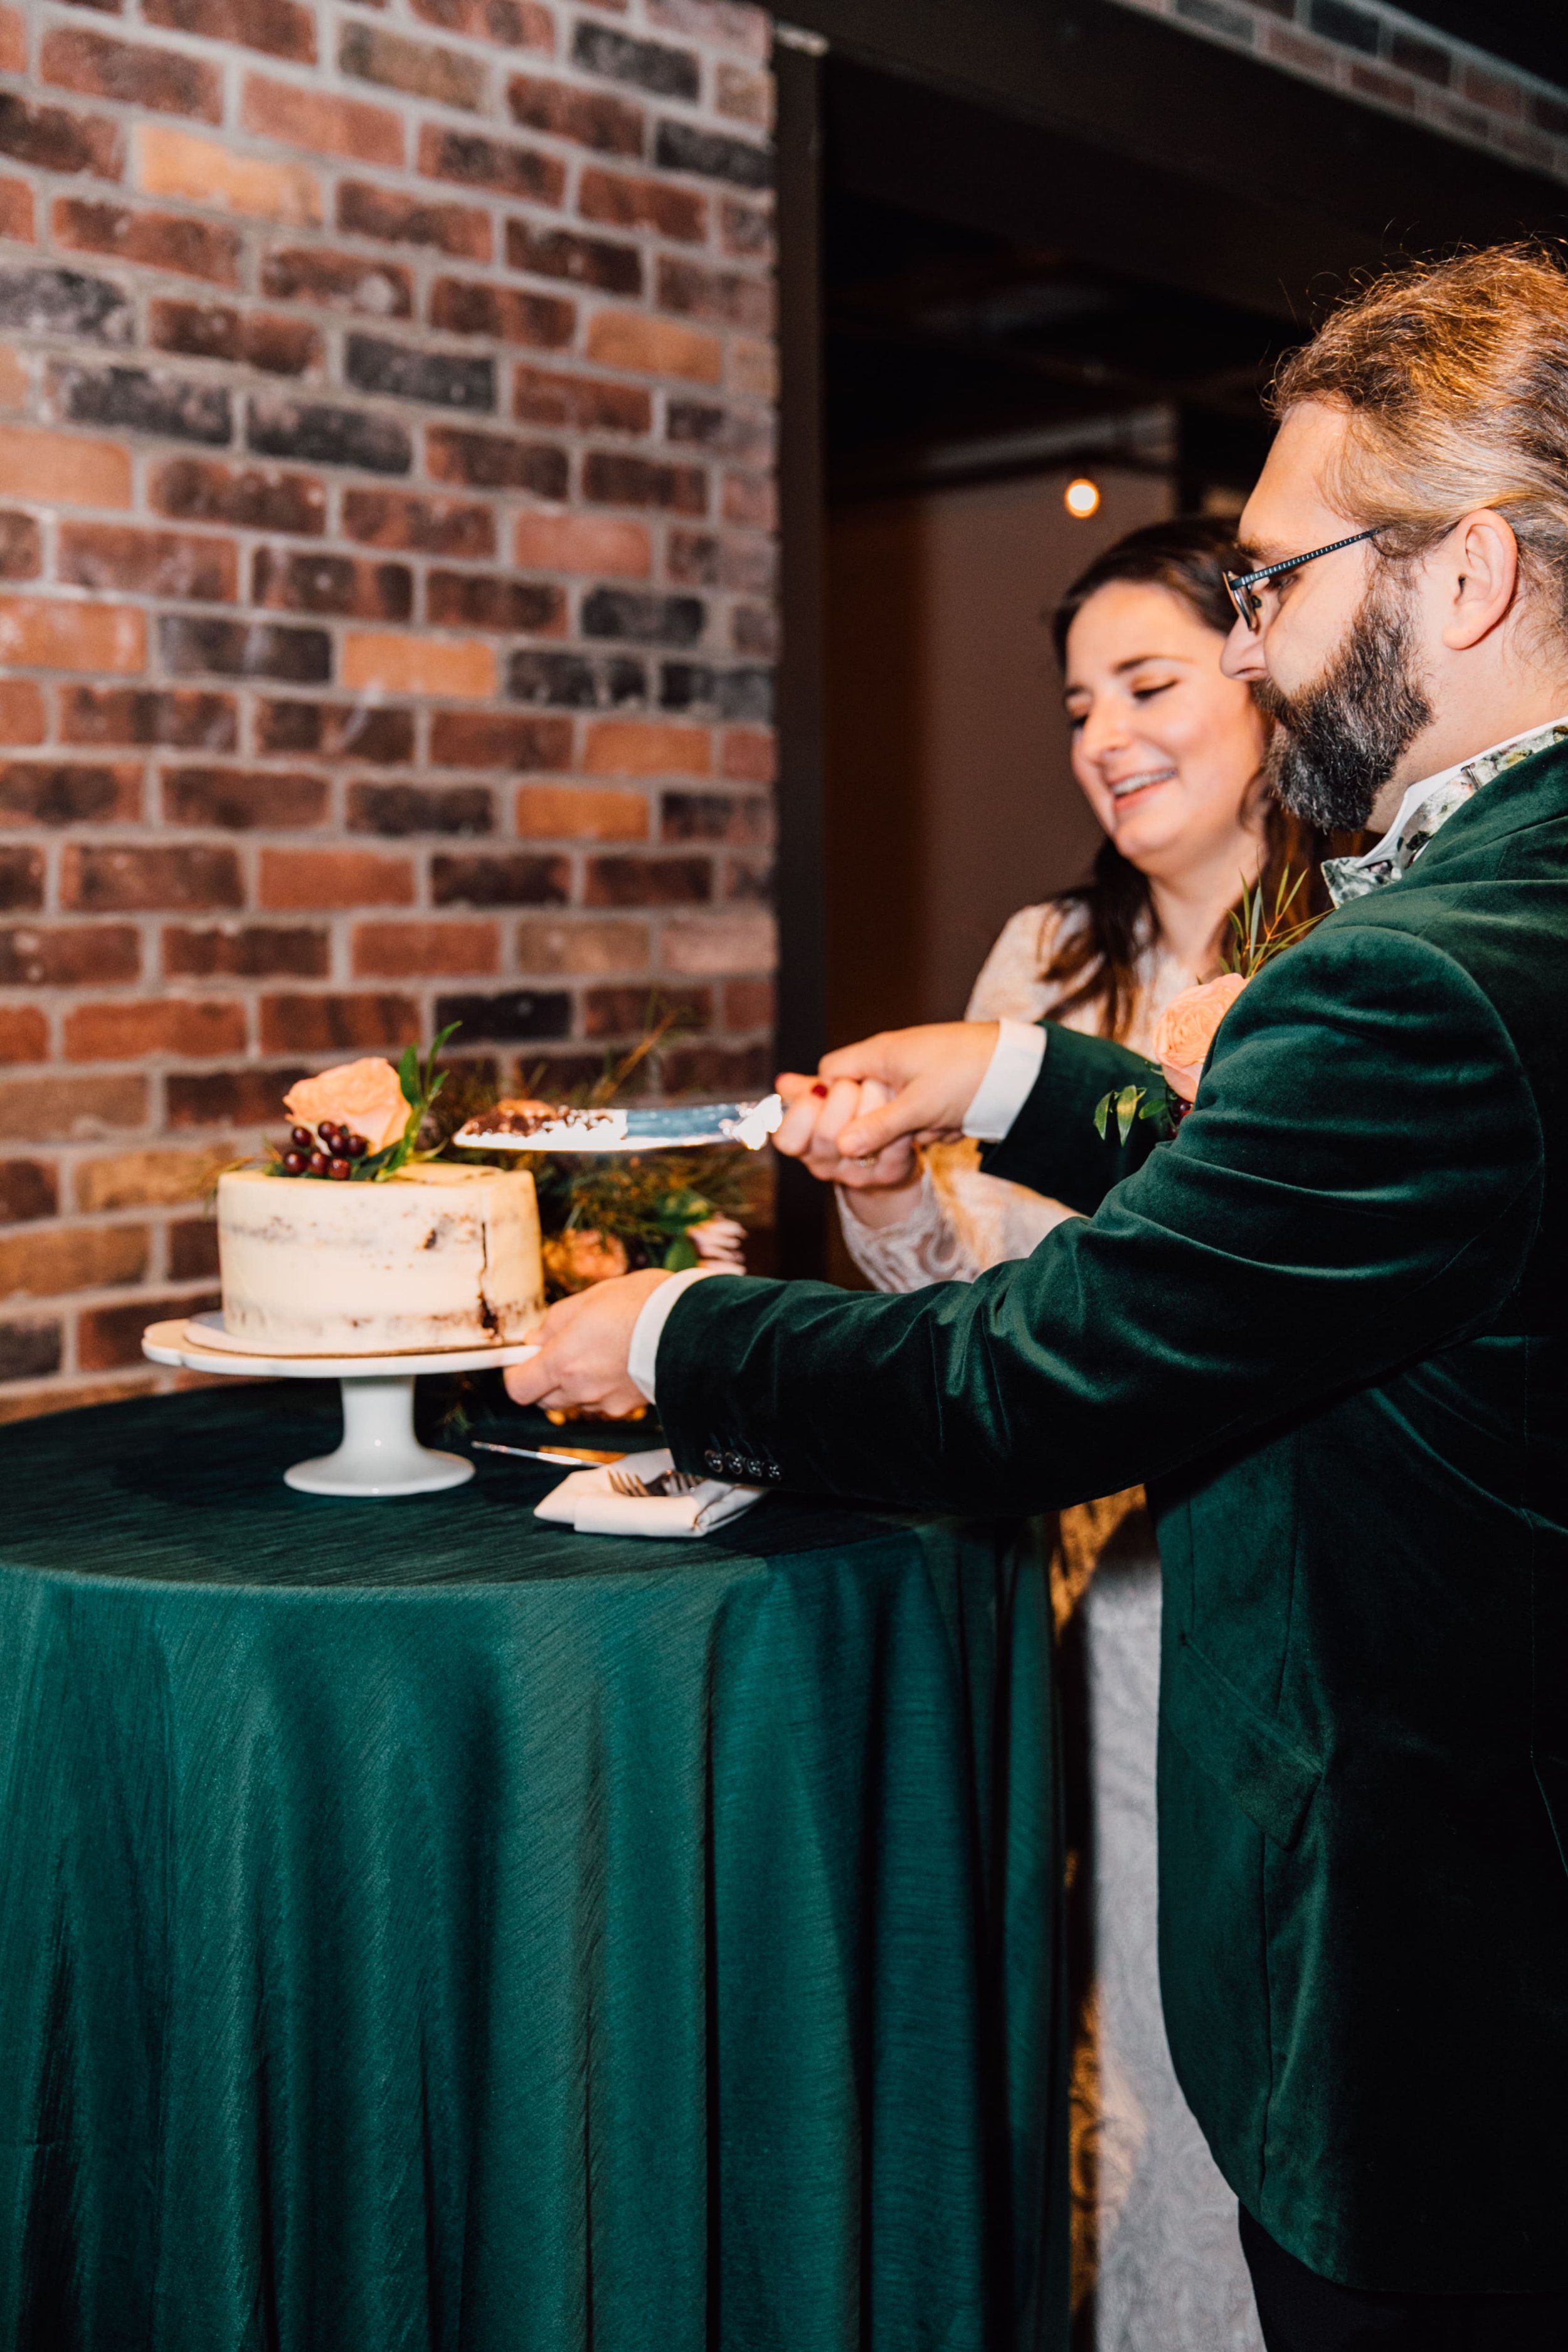  syracuse wedding photographer captures the newlyweds cutting into their wedding cake 